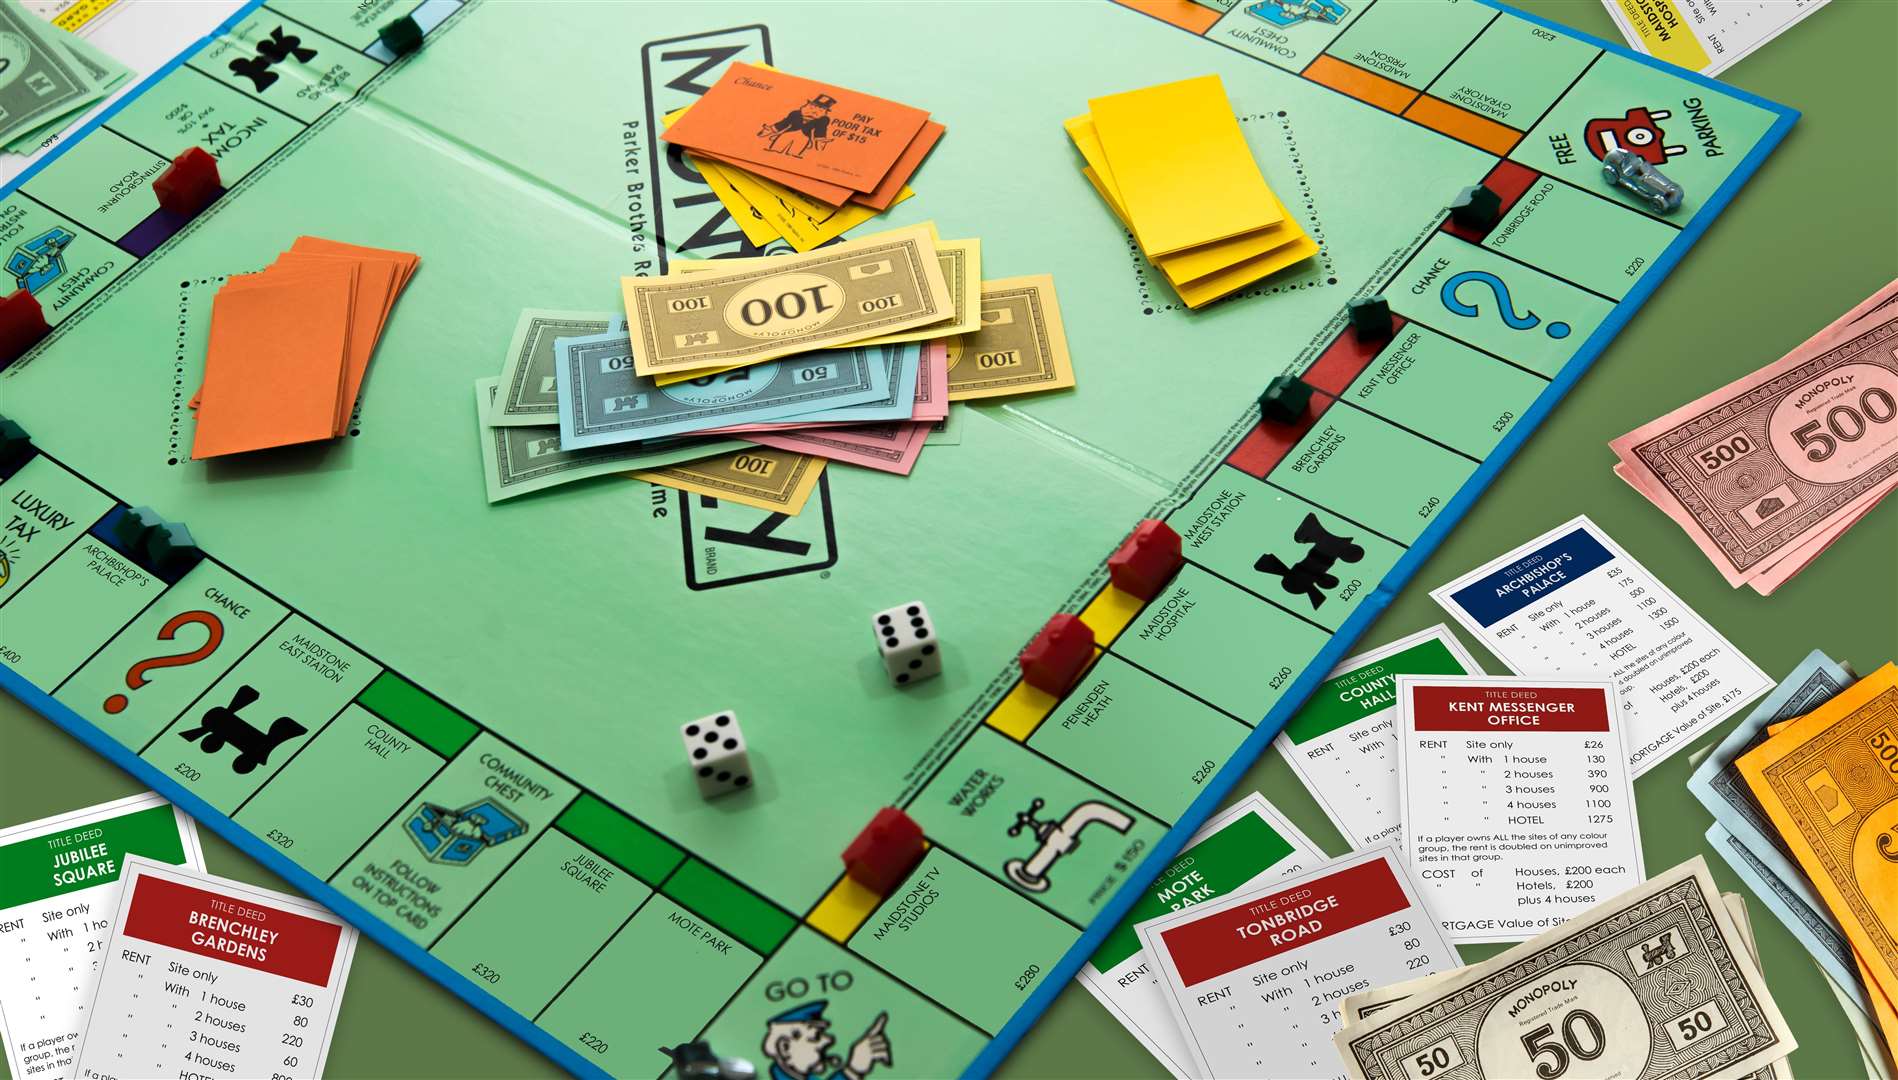 monopoly properties